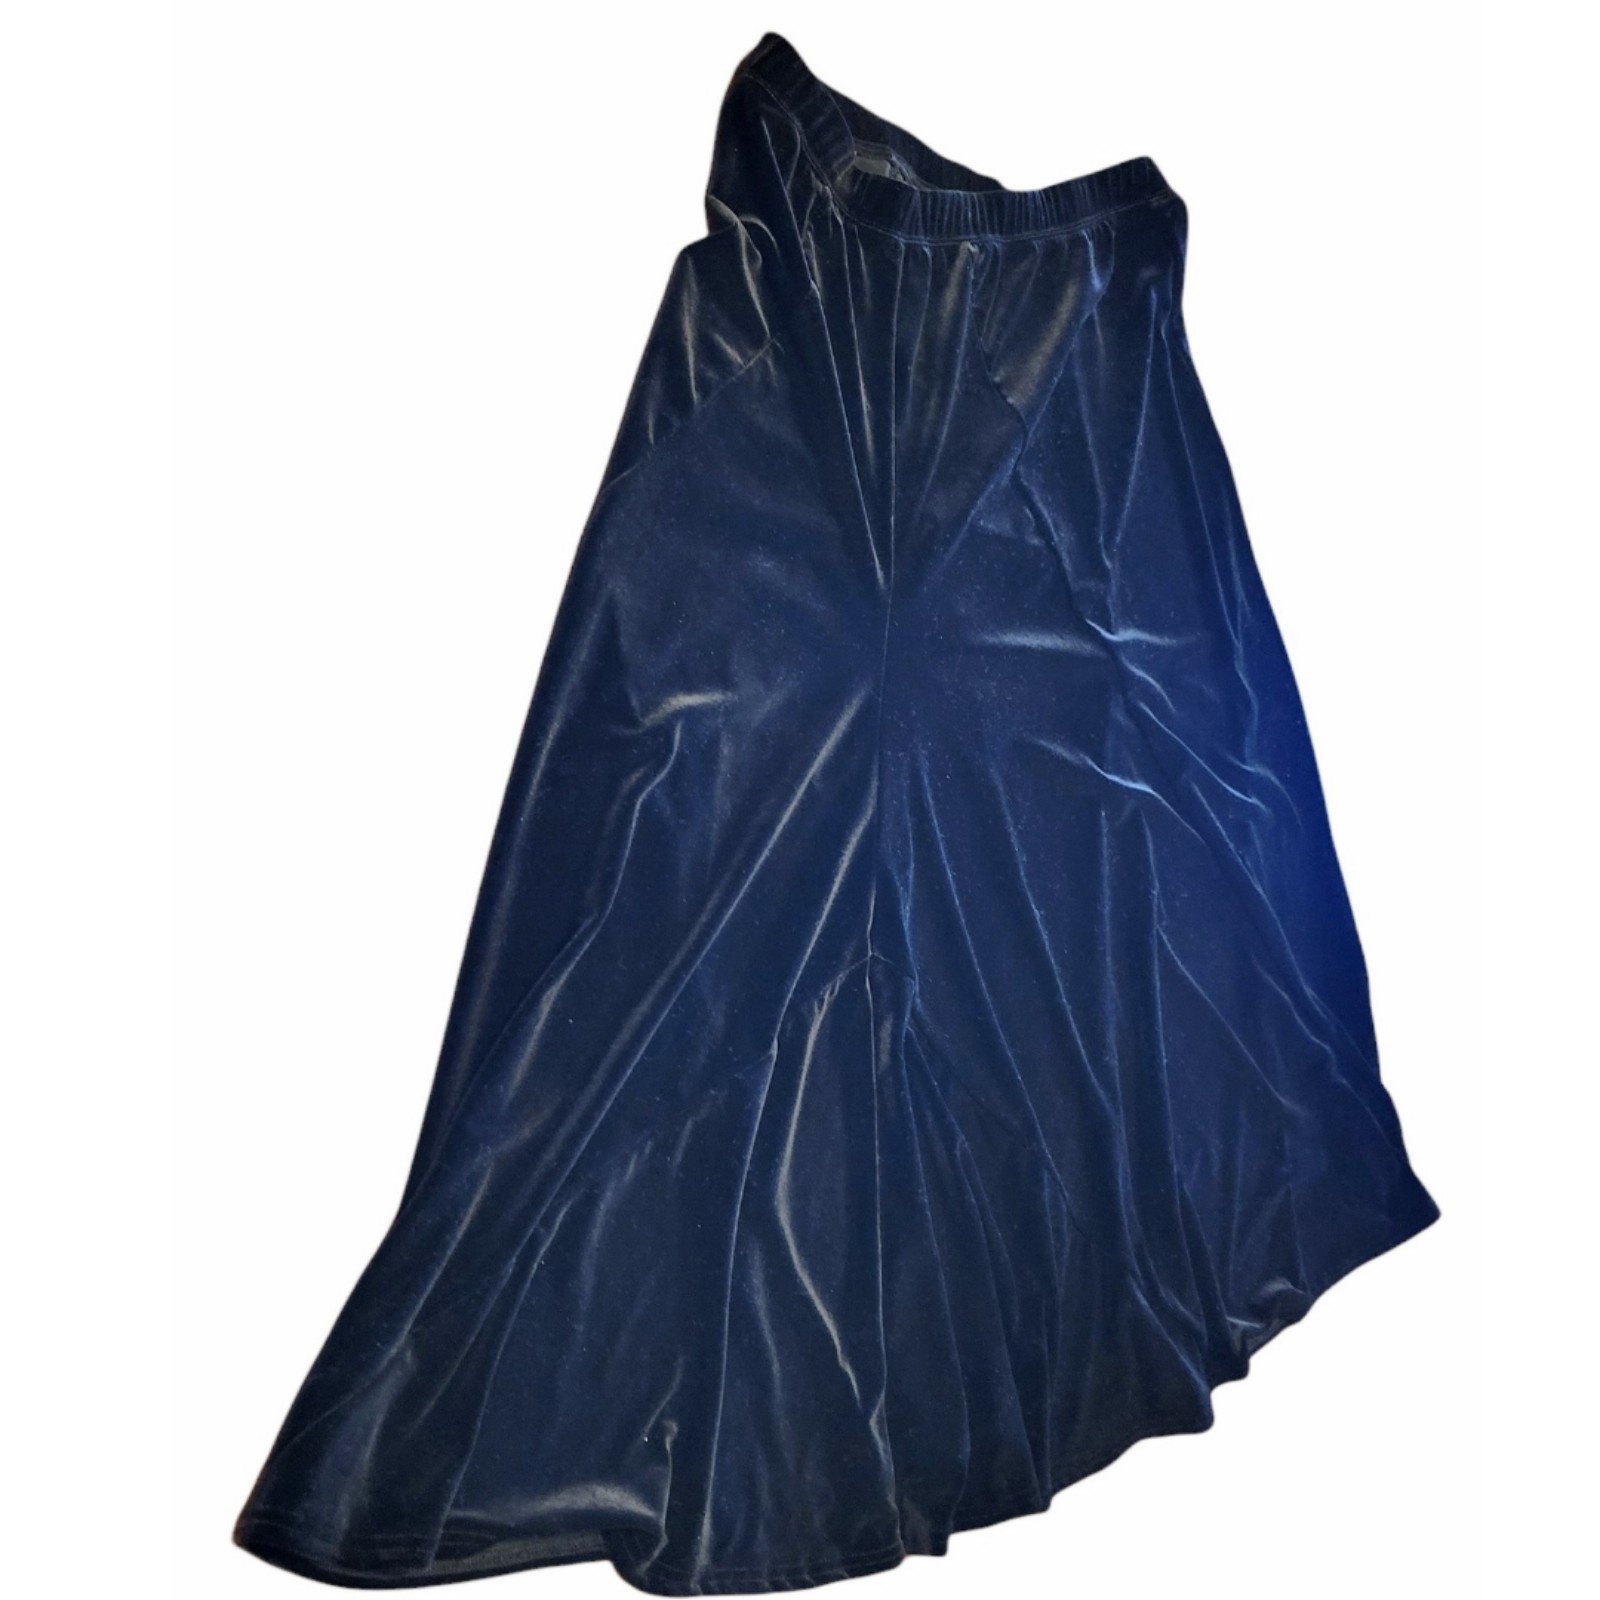 Black EUC Coldwater Creek Long Skirt Petite Large 6S79Qw1vl